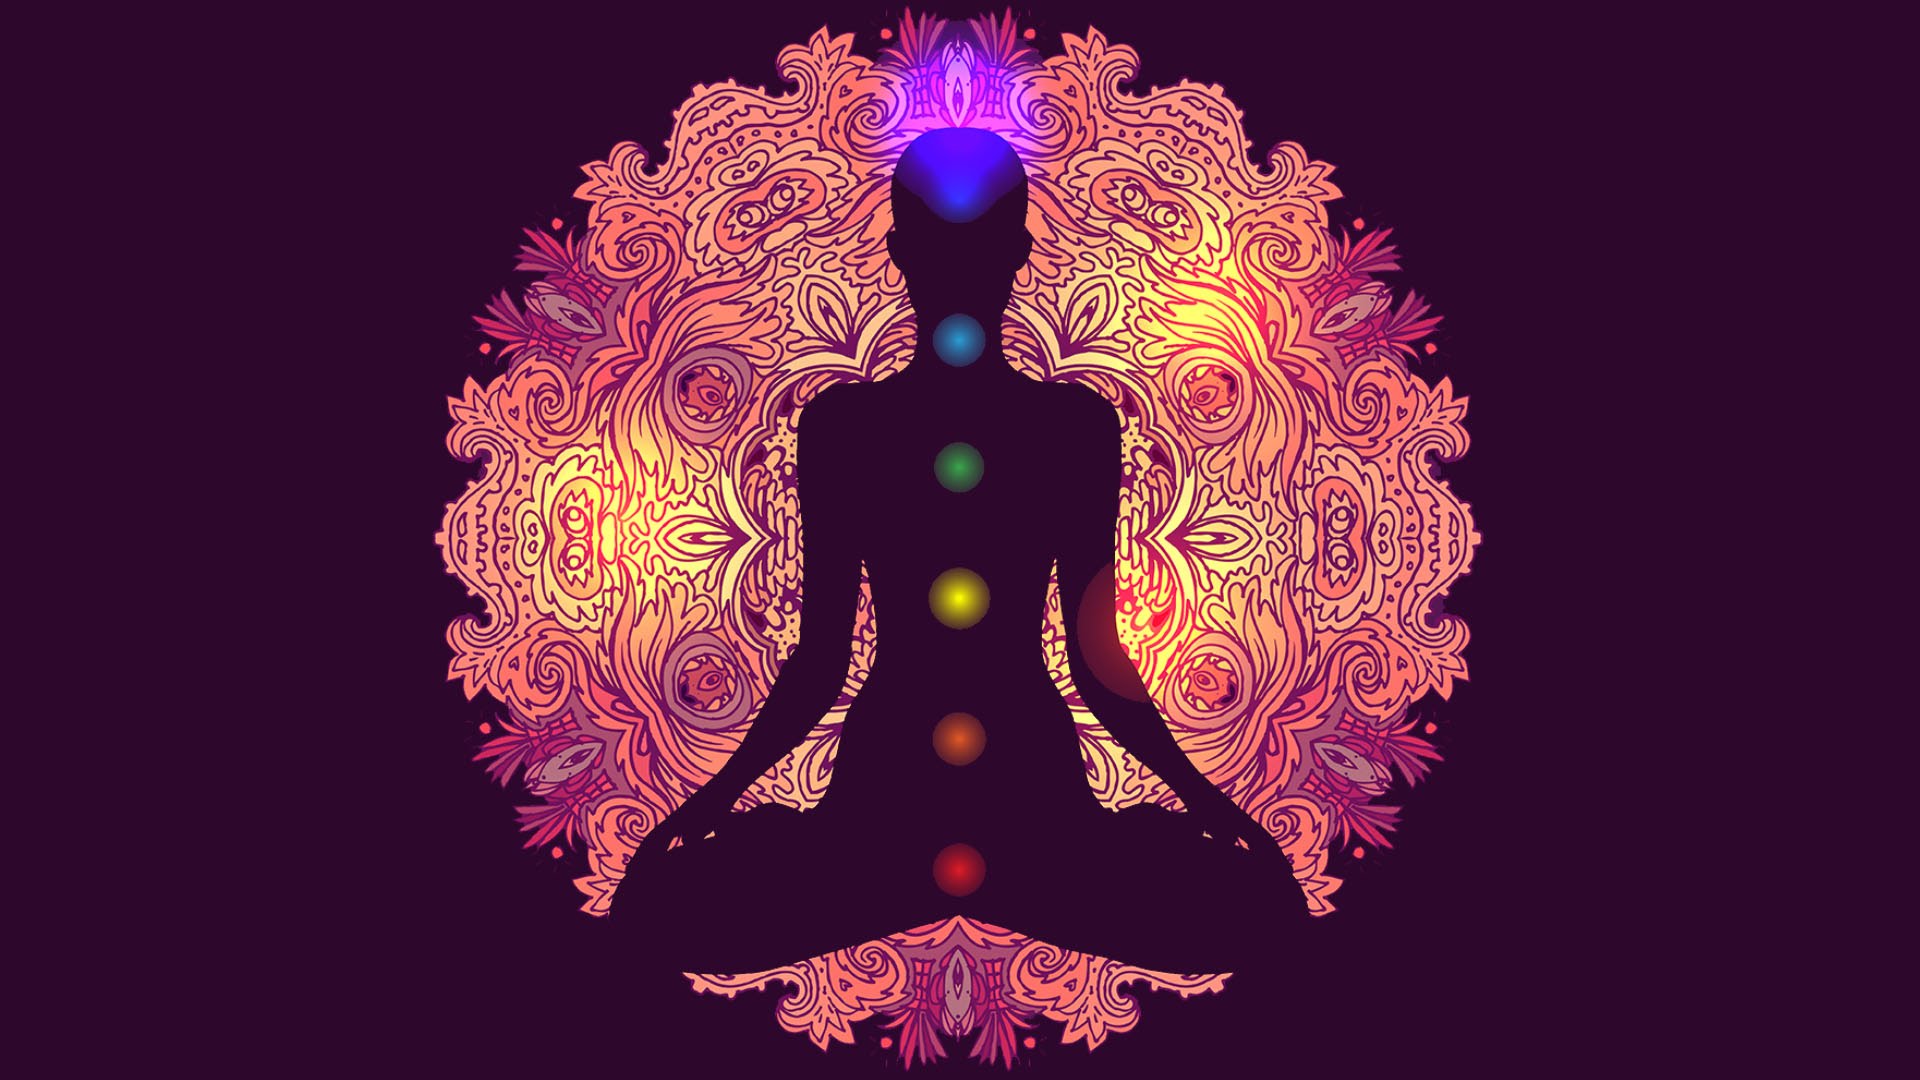 Meditation Chakra Wallpaper Pixshark Image